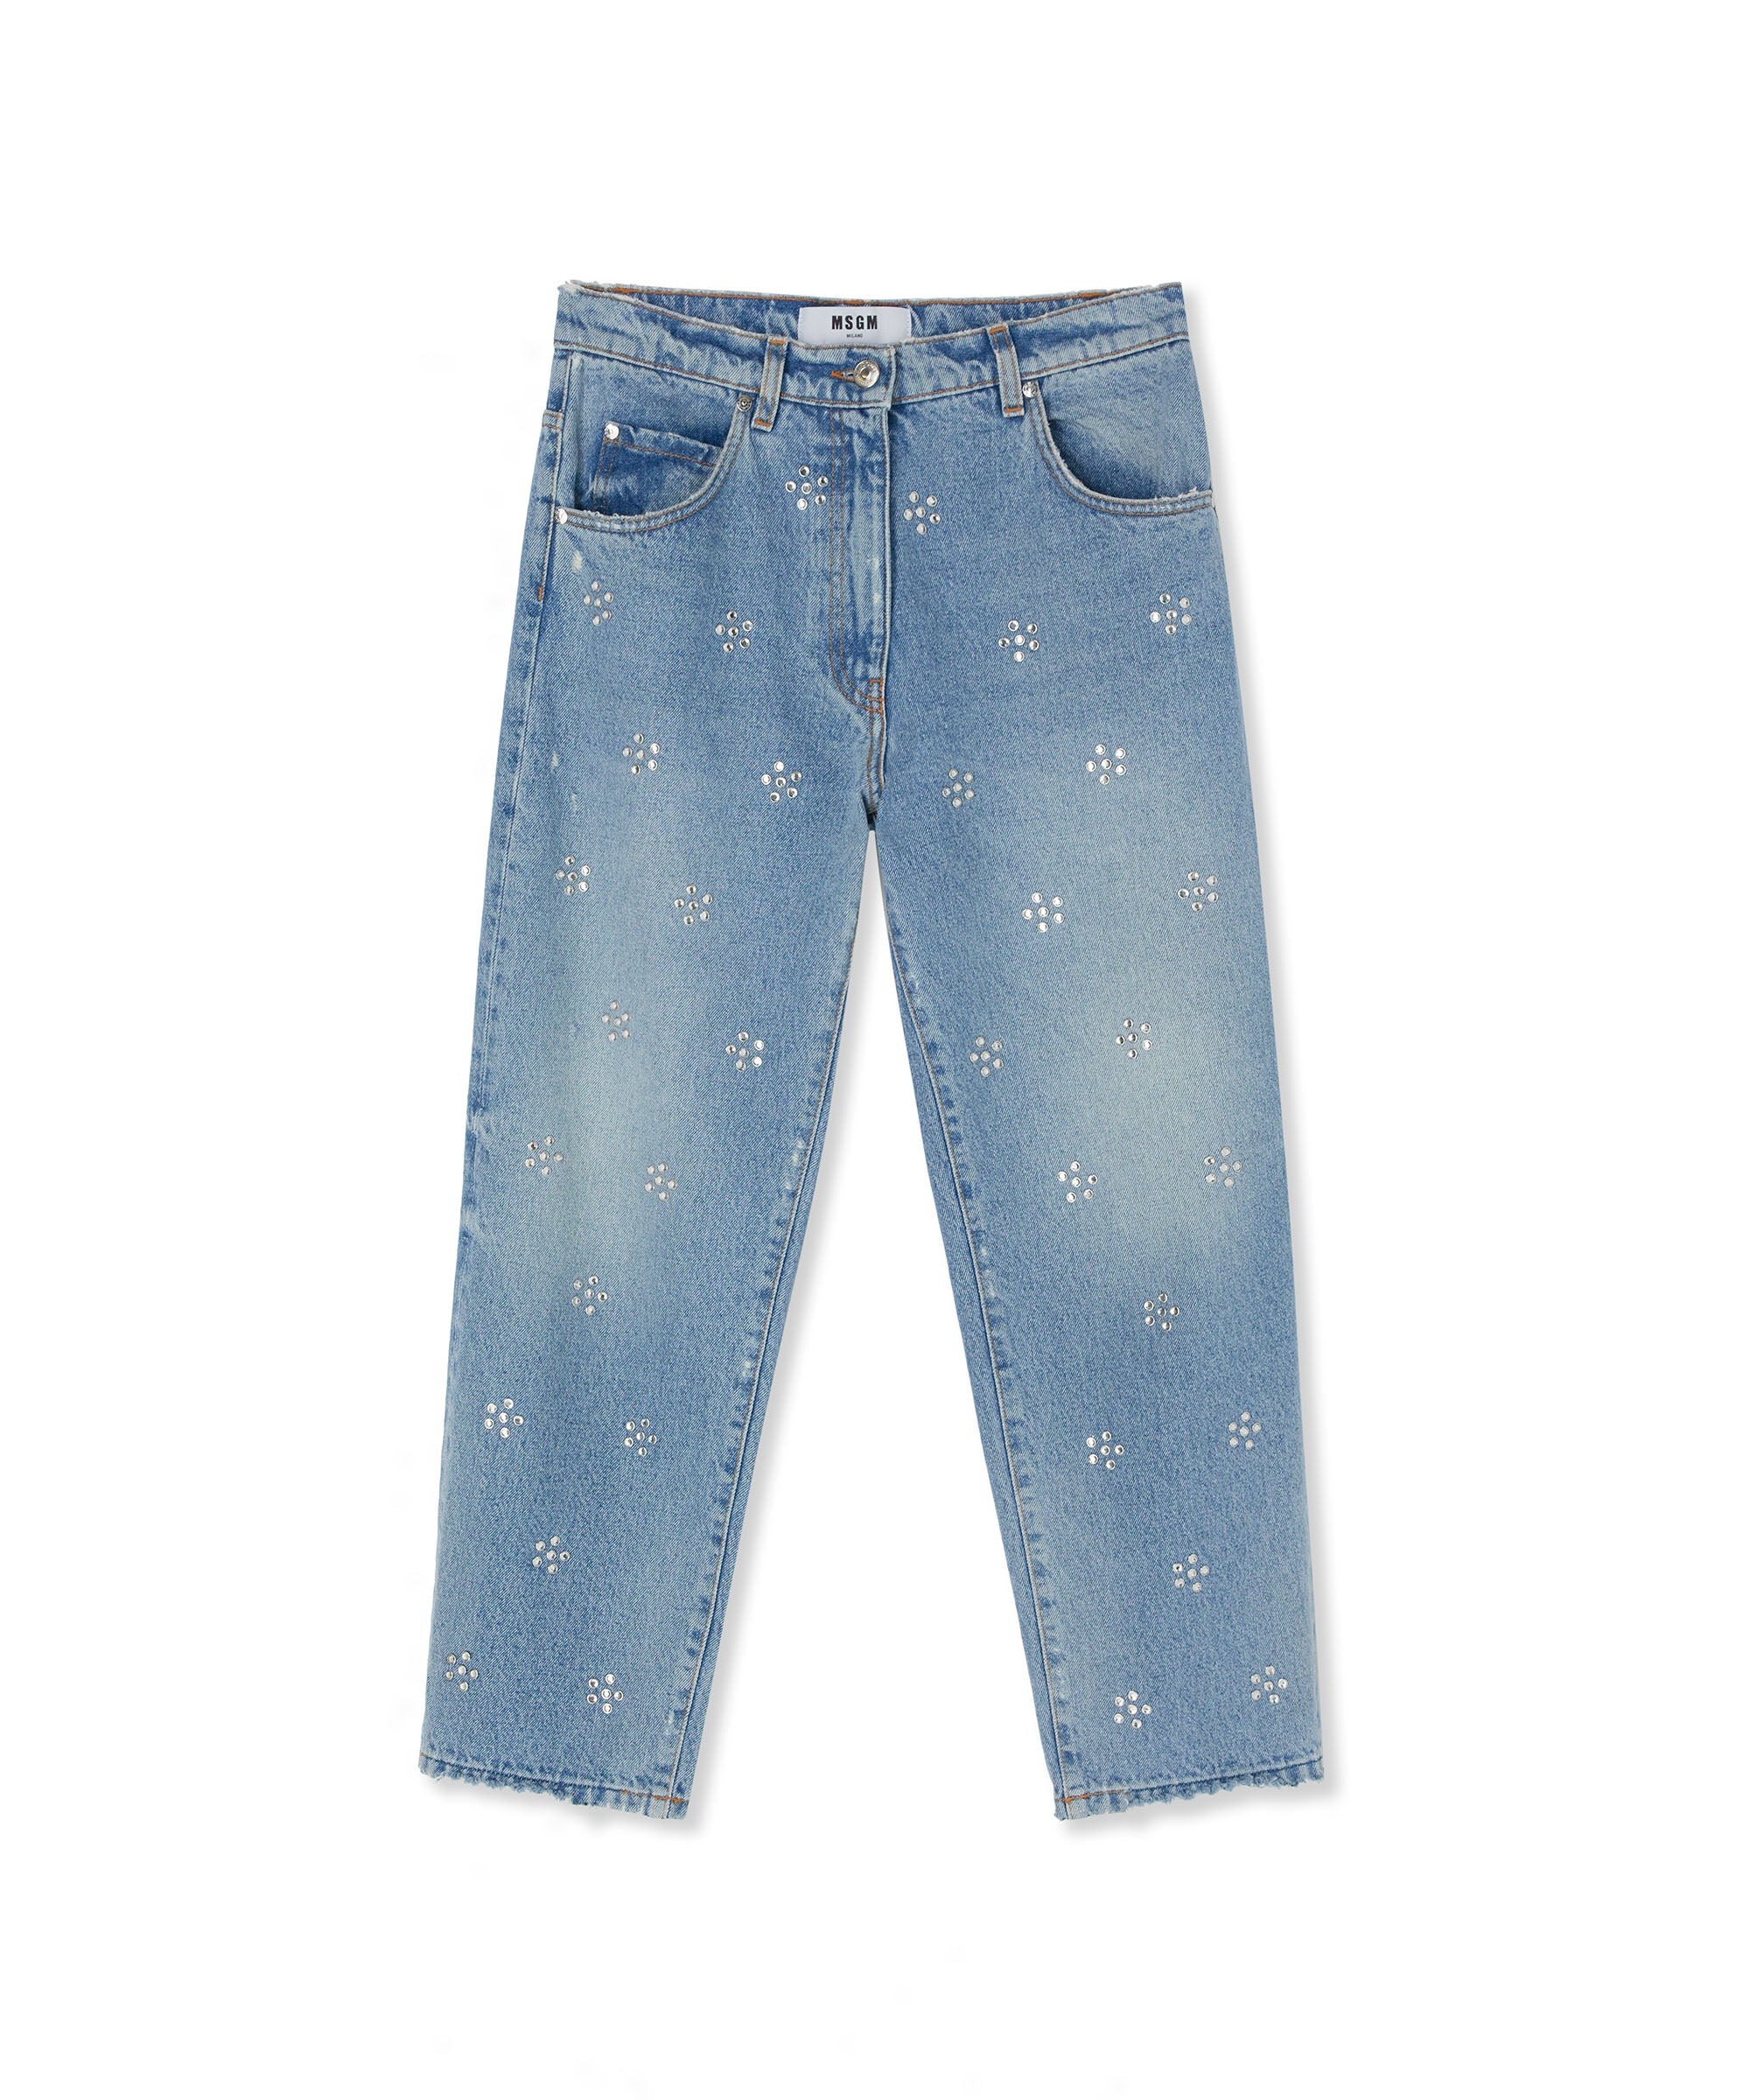 Blue denim pants wih 5 pockets and daisy rhinestone application - 1